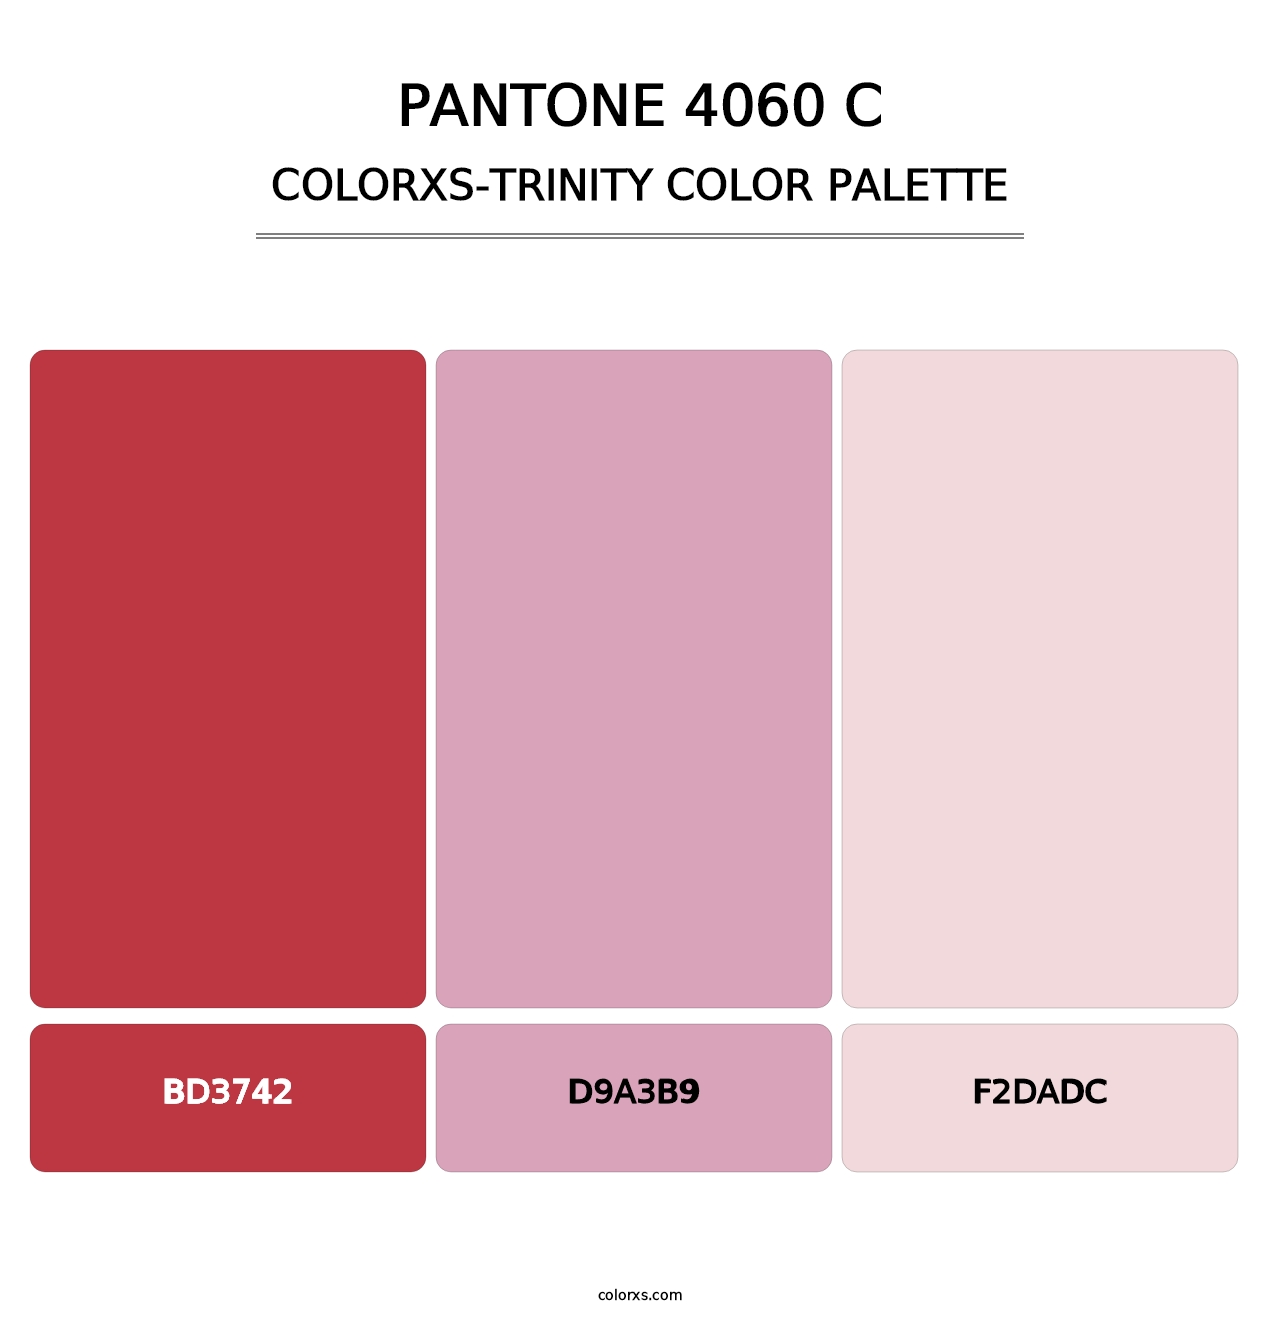 PANTONE 4060 C - Colorxs Trinity Palette